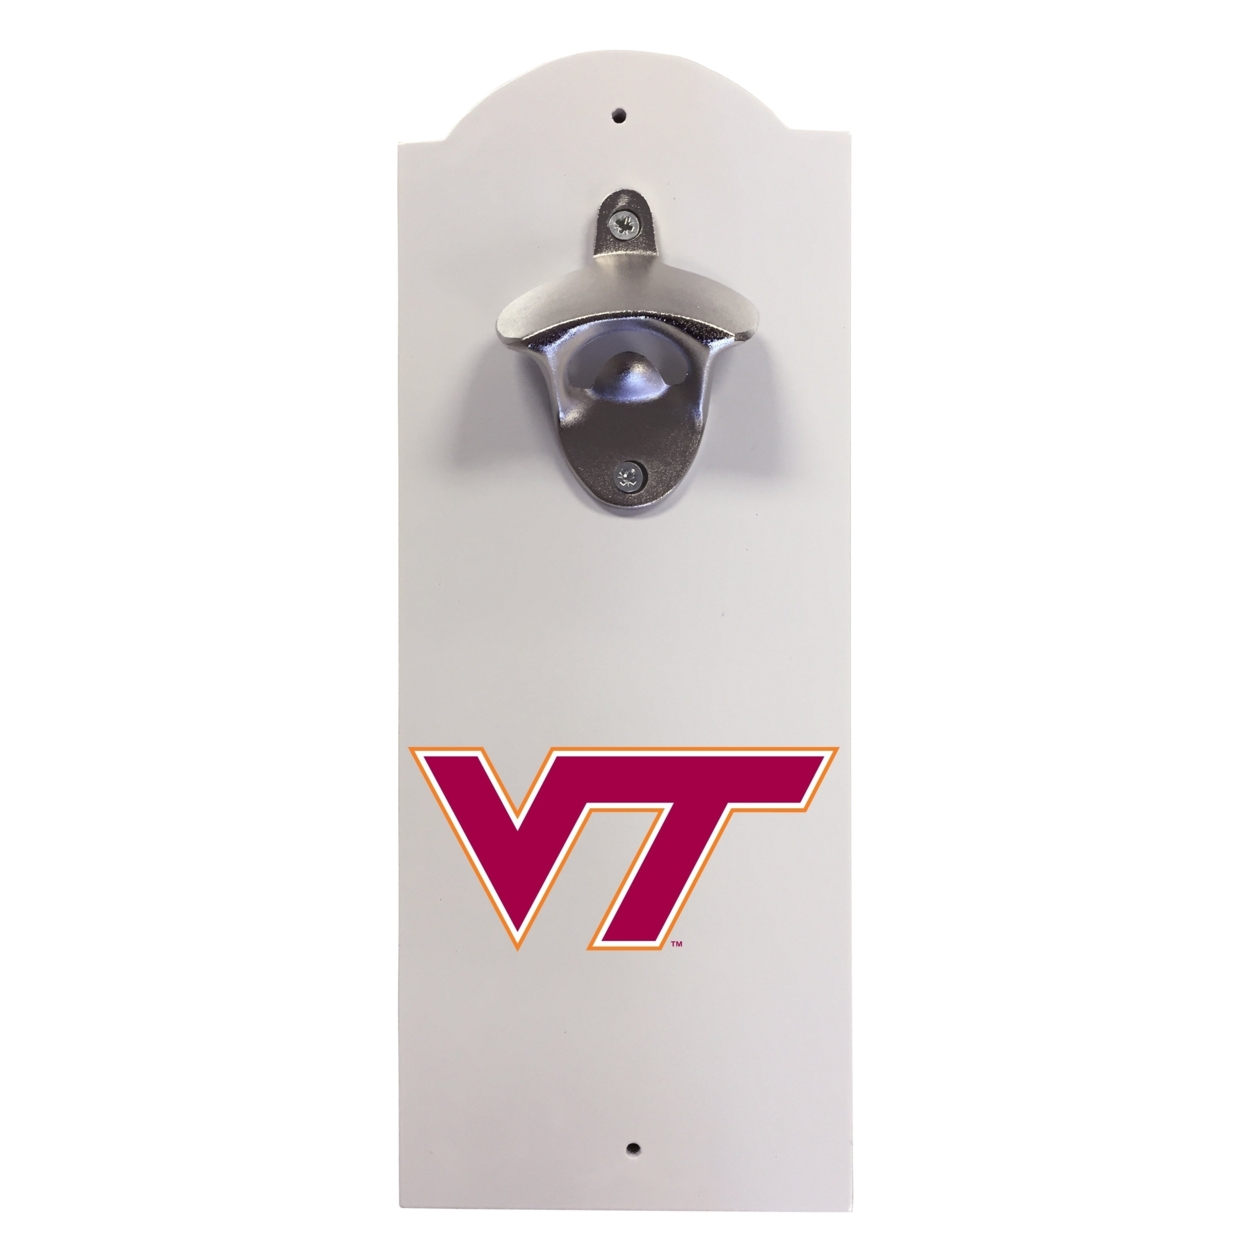 Virginia Polytechnic Institute VT Hokies Wall Mounted Bottle Opener